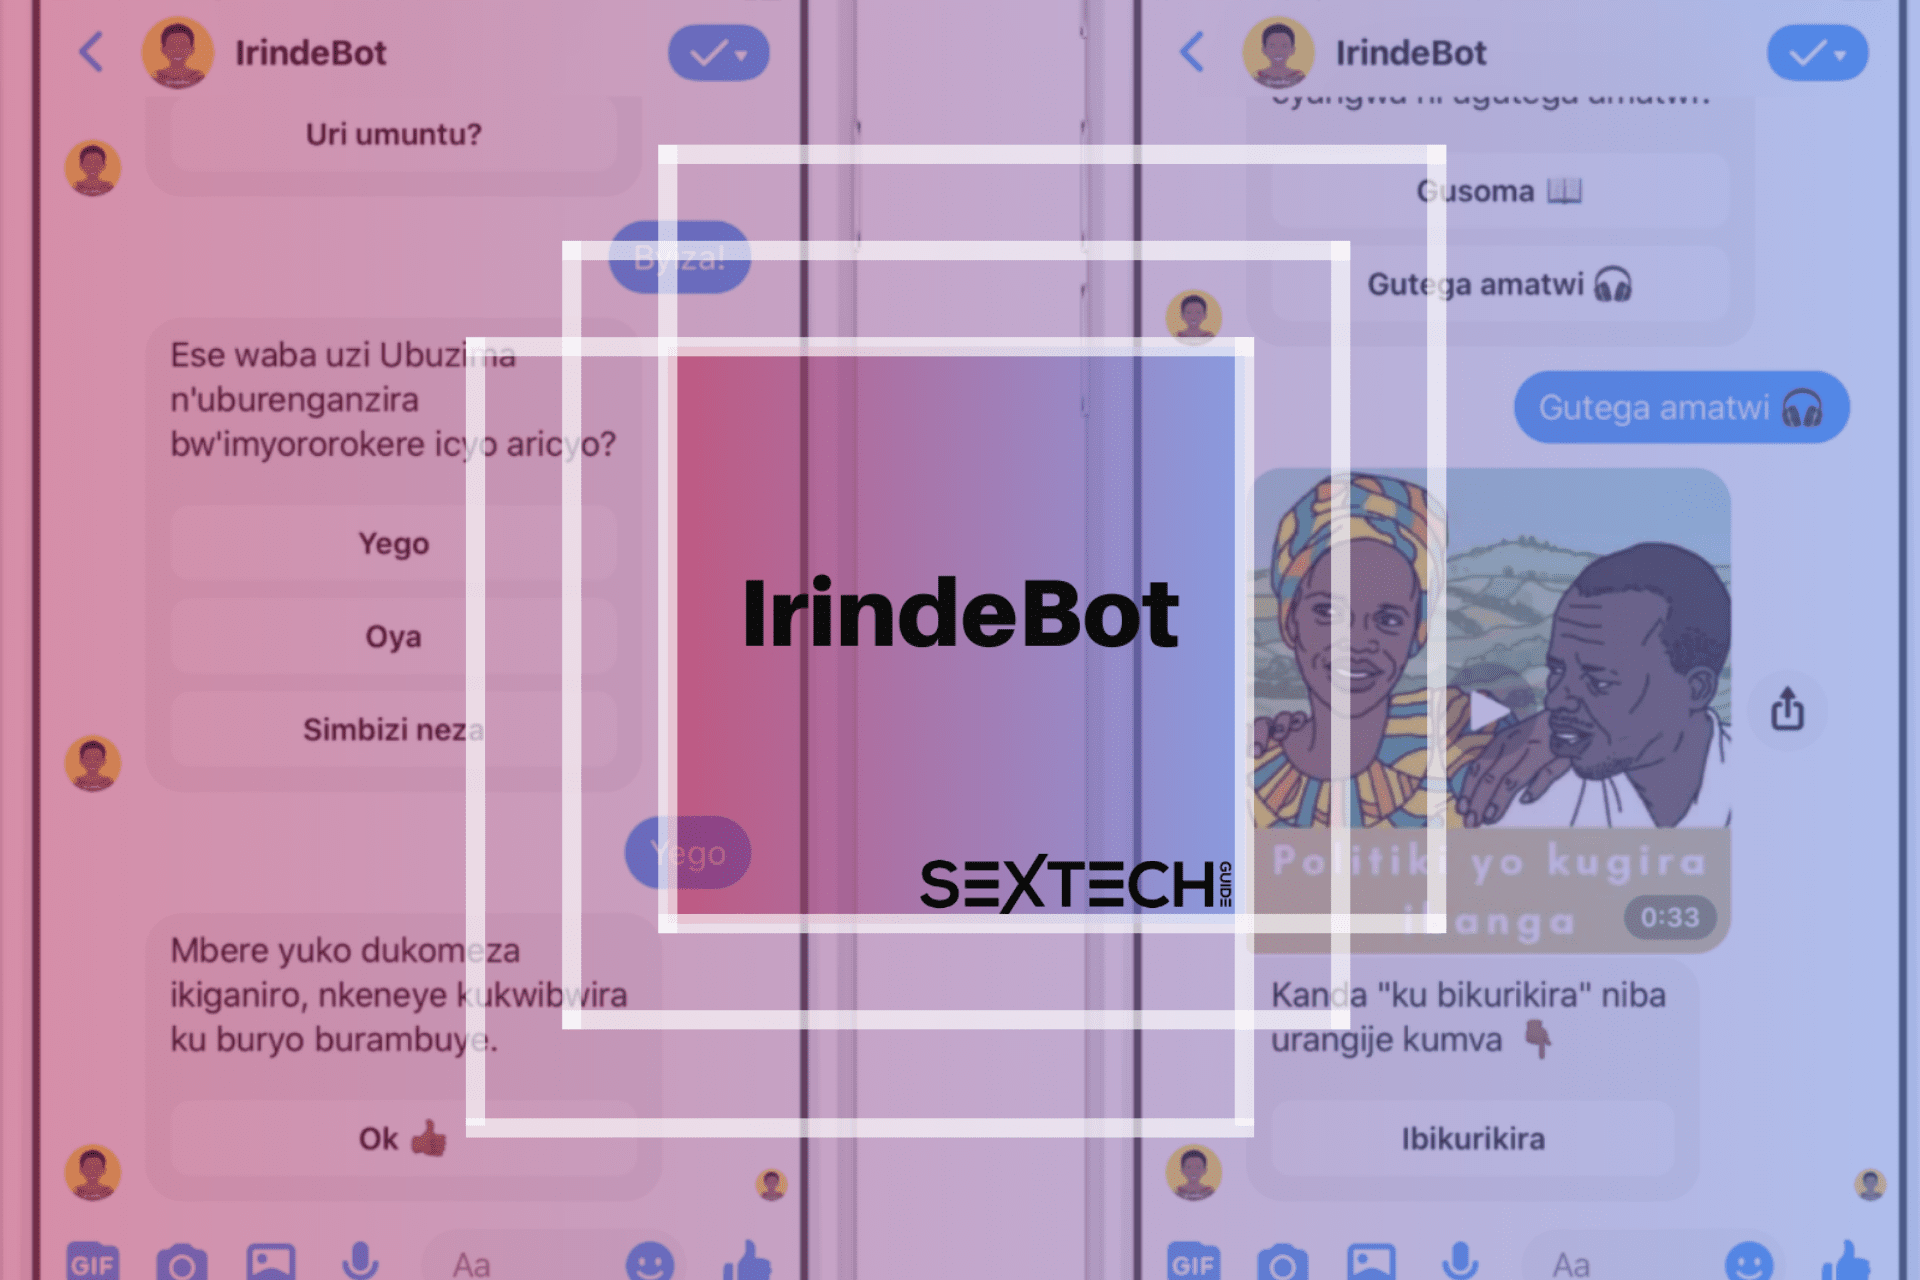 Irdibot - a new sex ed chatbot messaging app rolling out to Brazil, India, Kenya, and Nicaragua following successful Rwanda pilot.